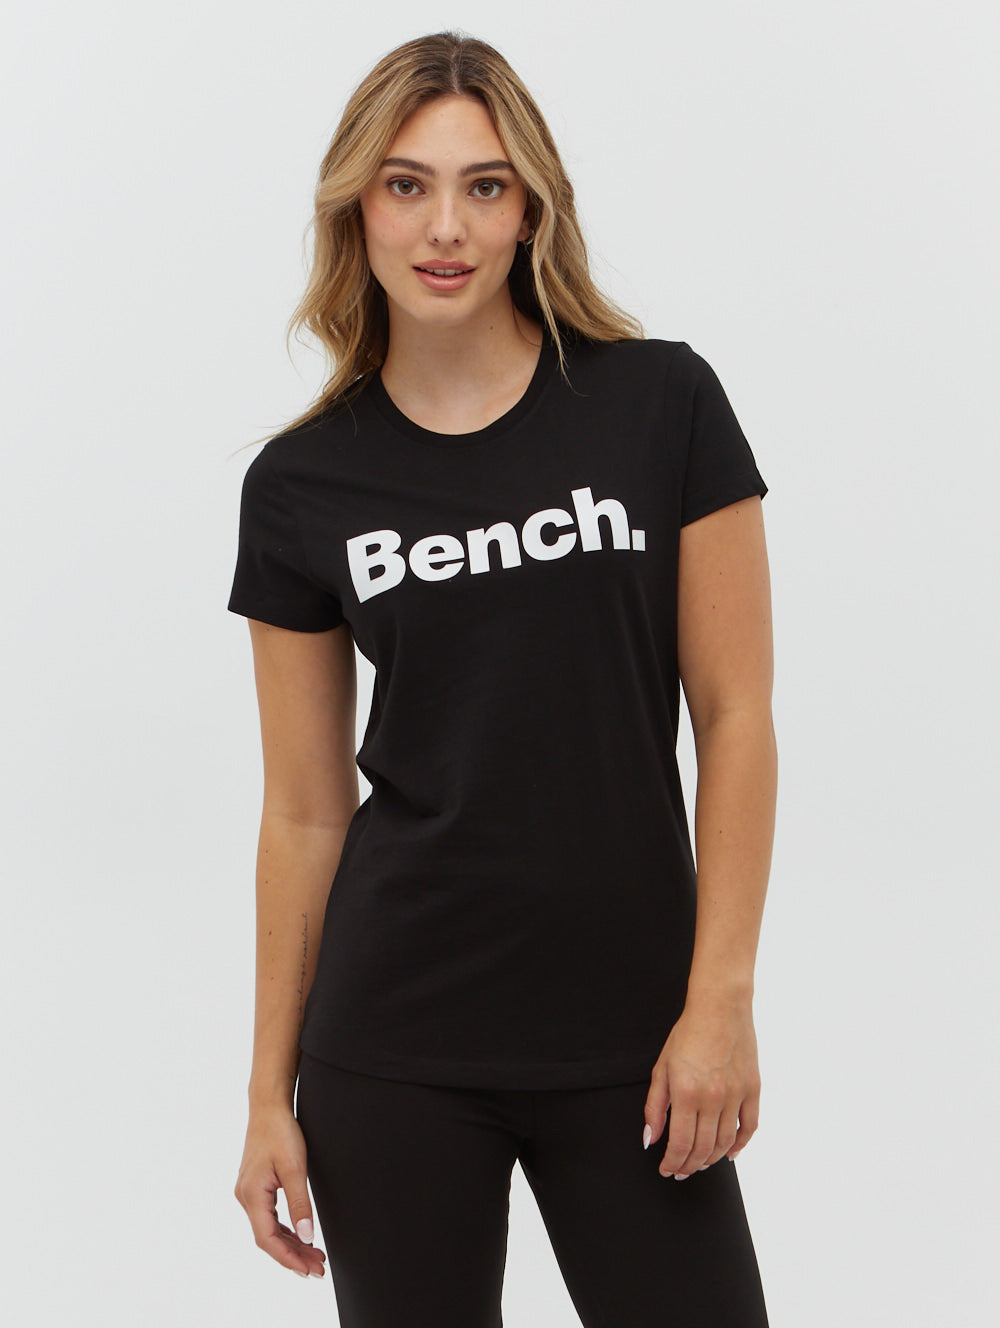 Women - Bench Body - Shop by Brand